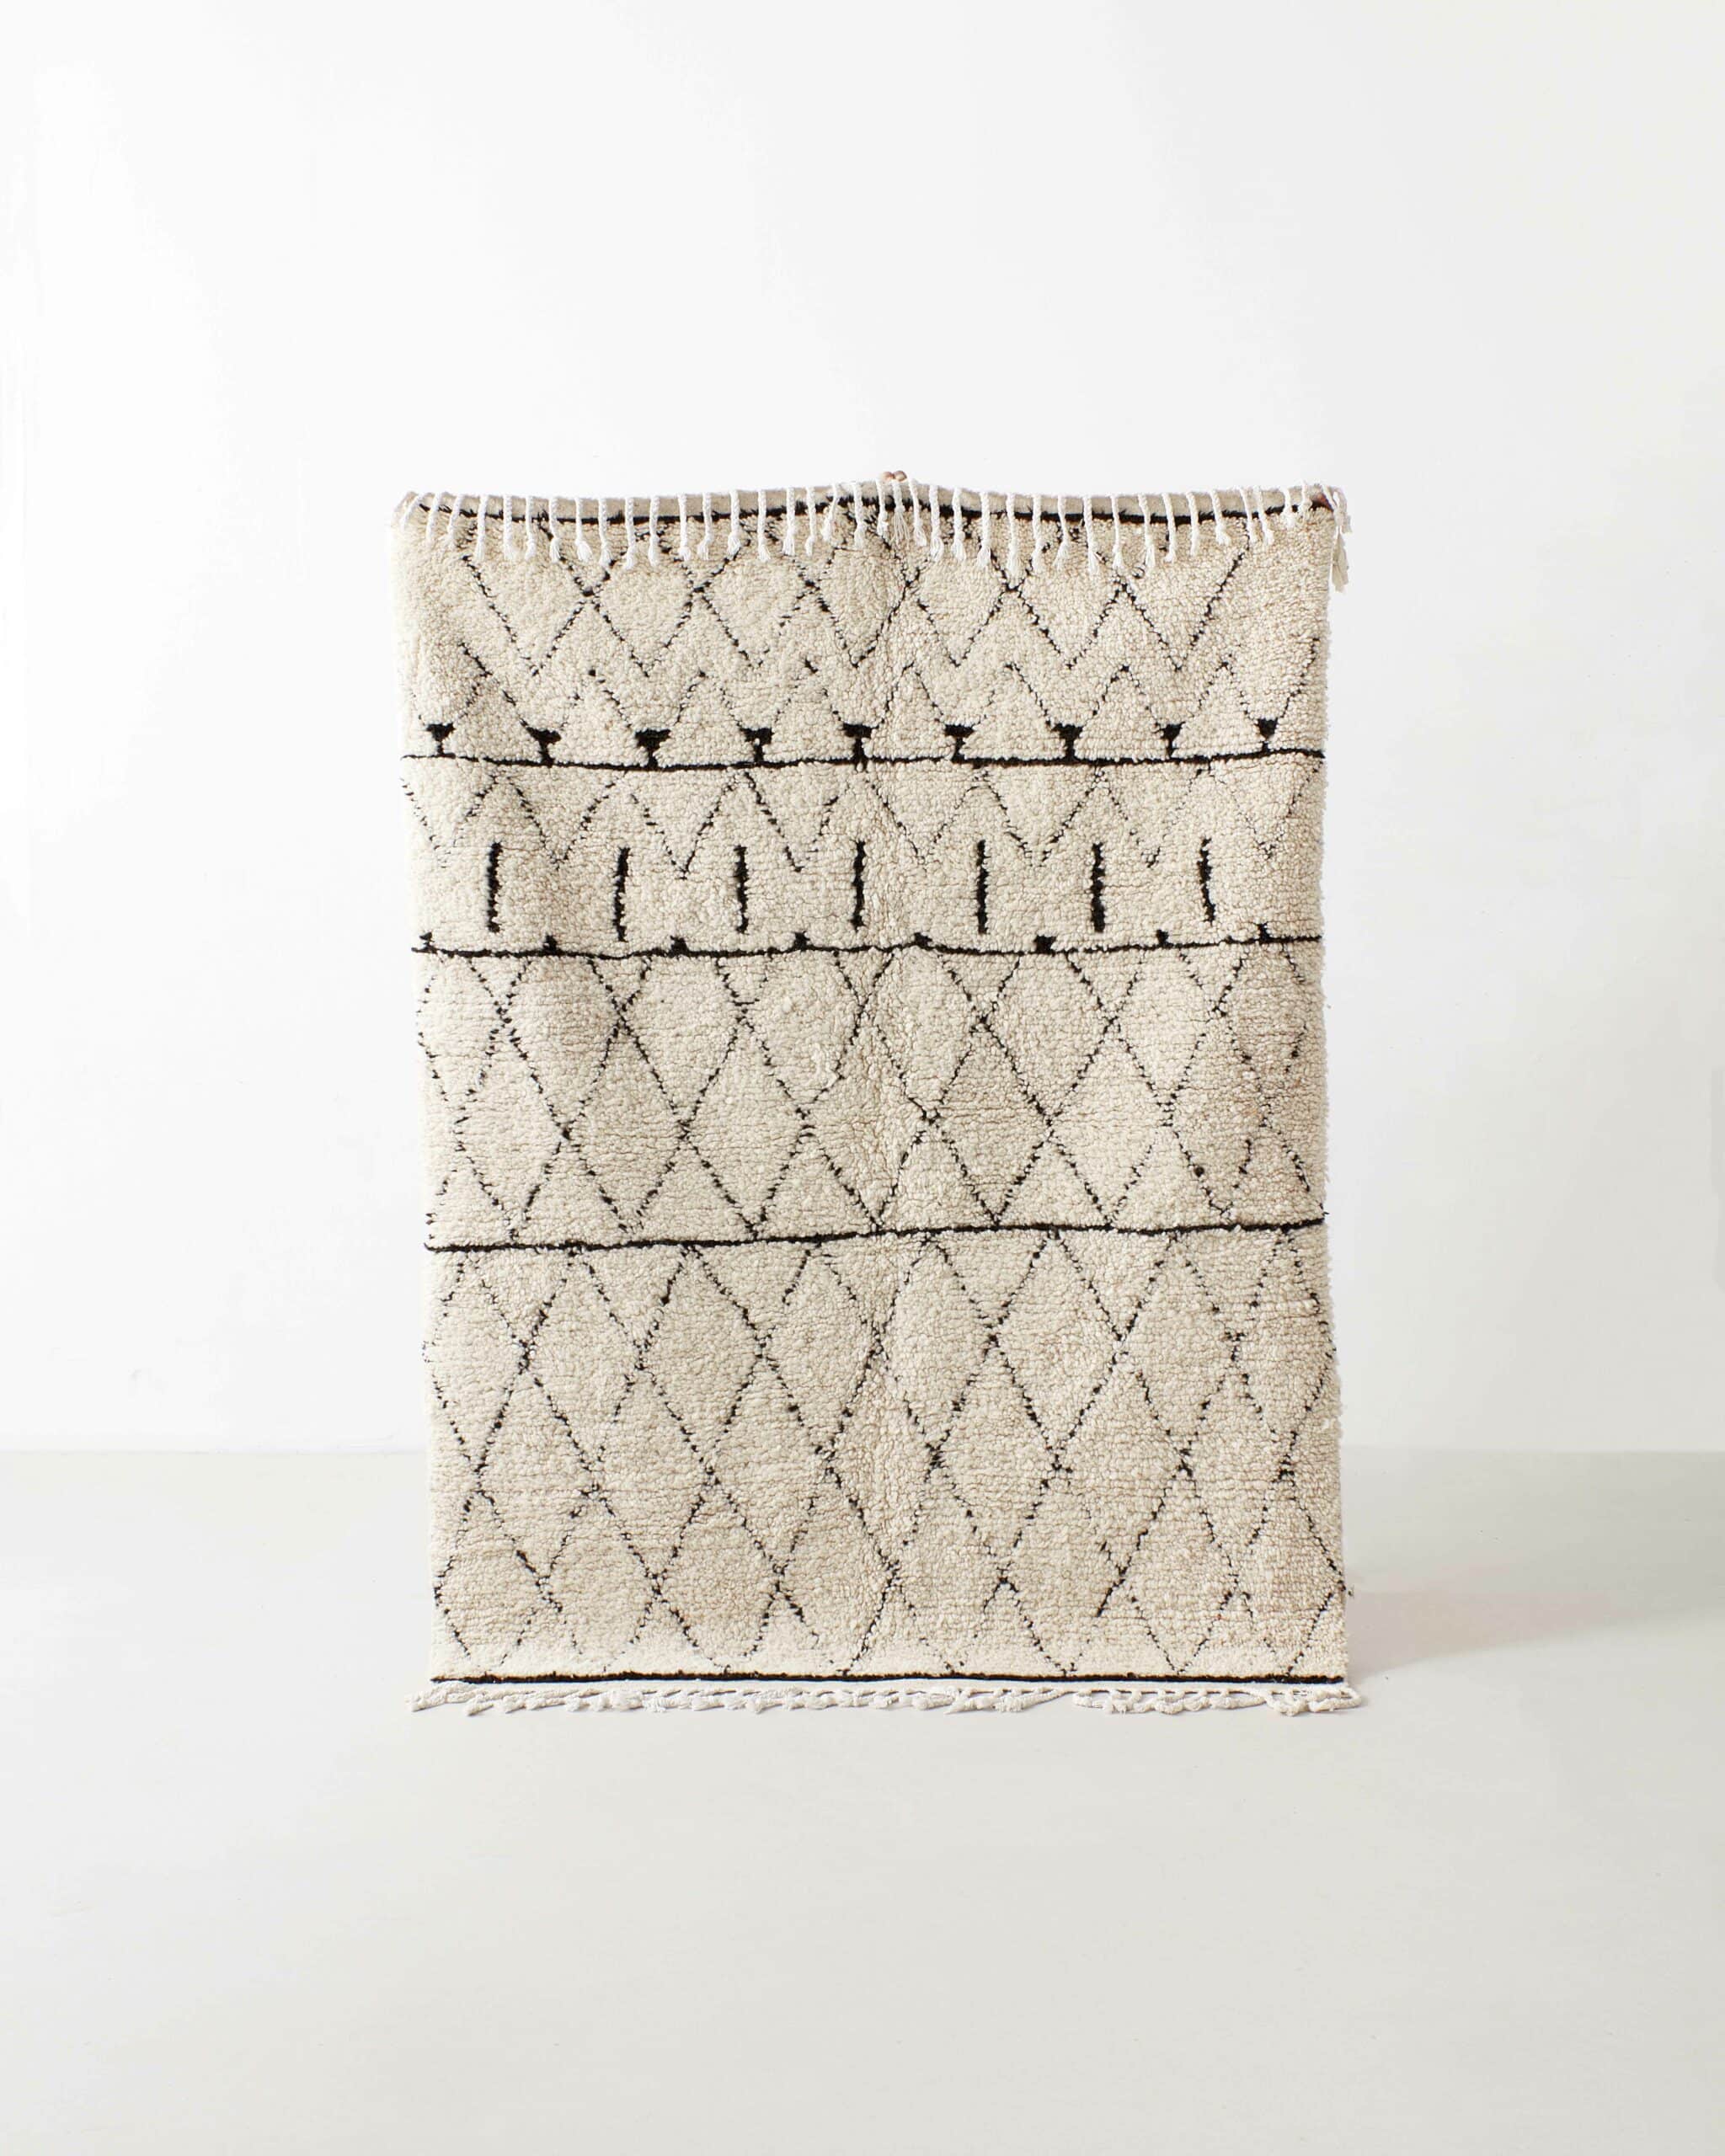 Berber rug w a repeating pattern